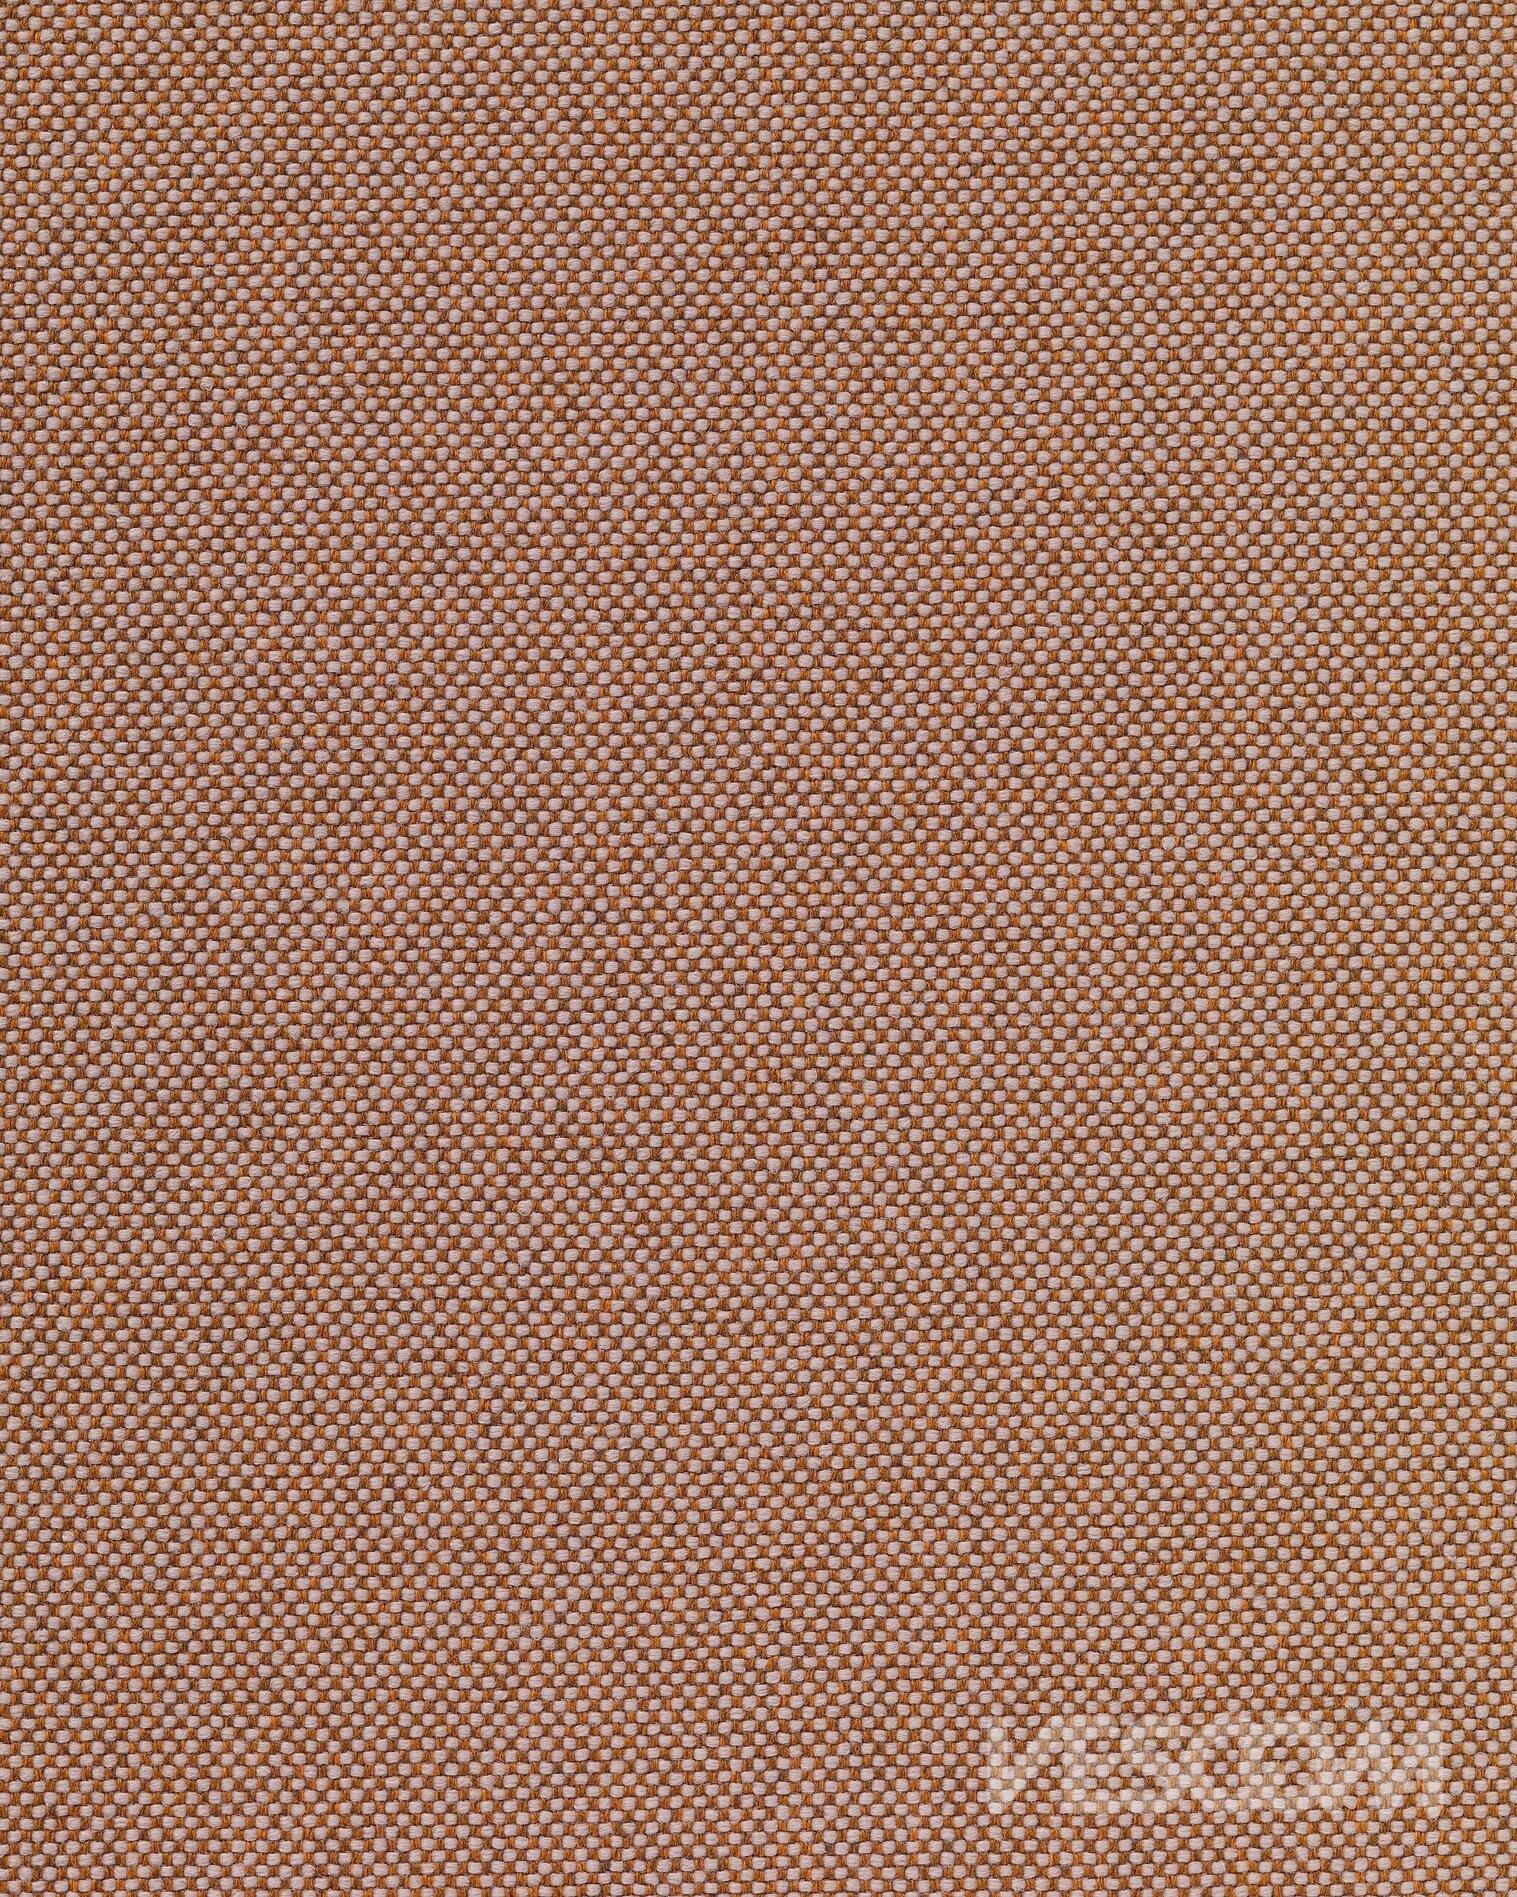 vescom-acton-upholstery-fabric-7062-04